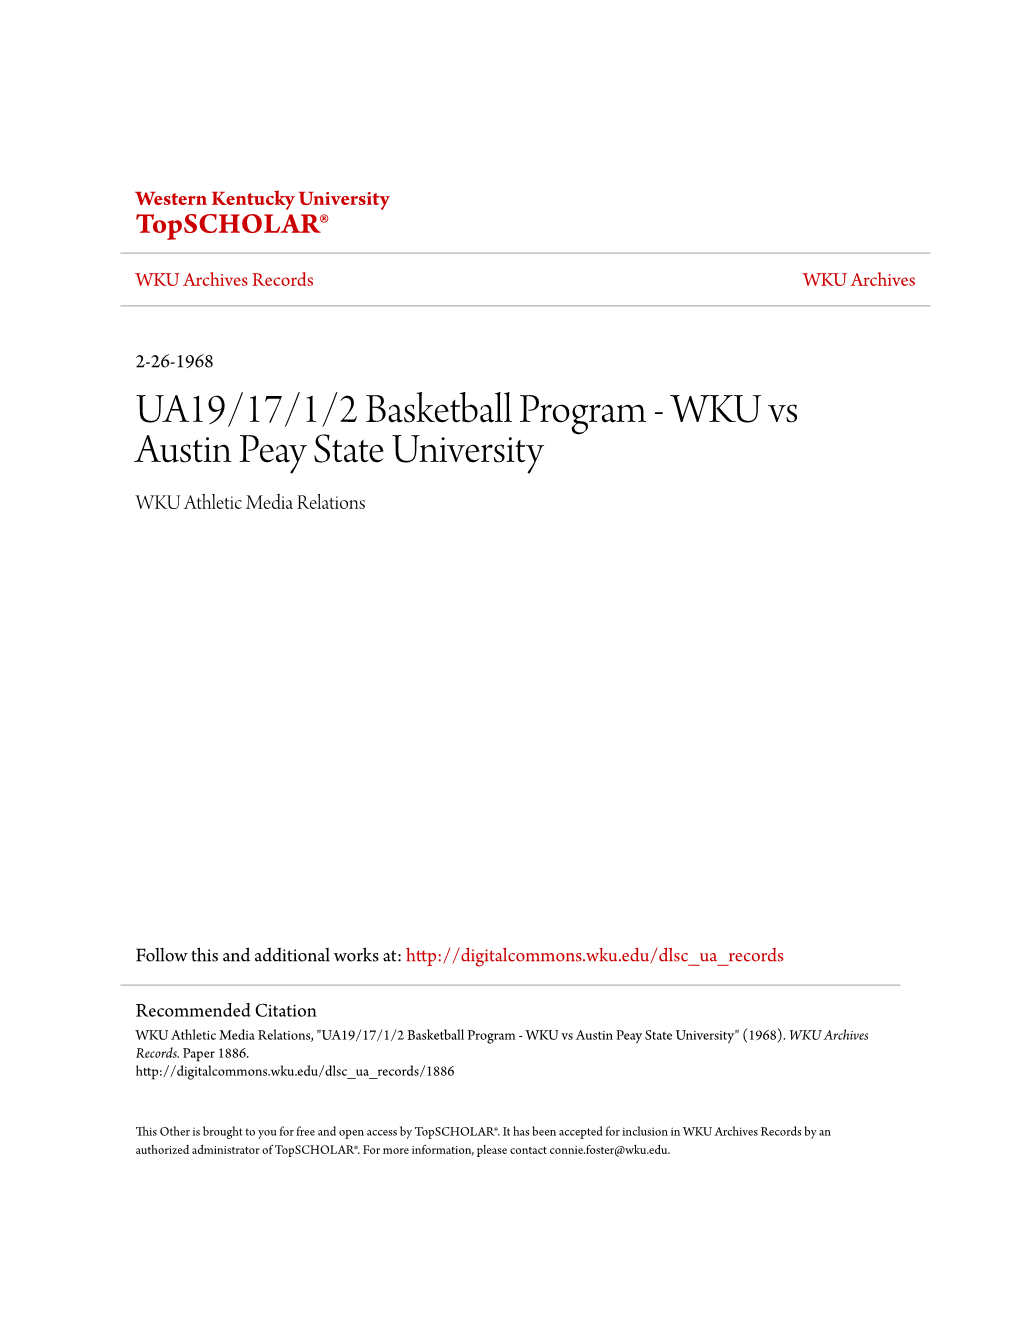 UA19/17/1/2 Basketball Program - WKU Vs Austin Peay State University WKU Athletic Media Relations